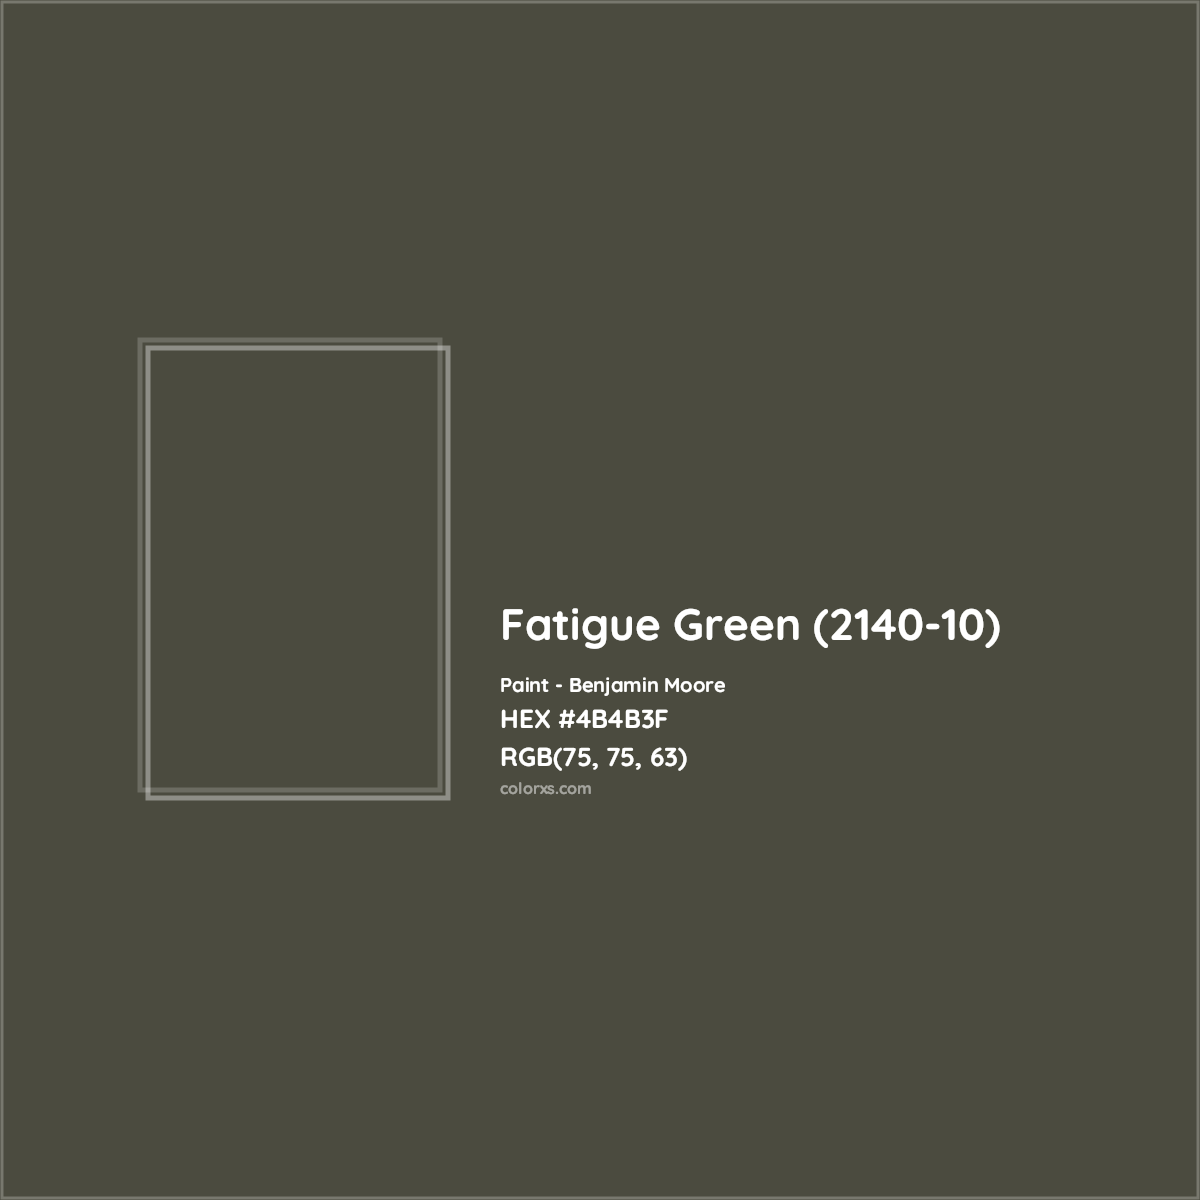 Benjamin Moore Fatigue Green (2140-10) Paint color codes, similar